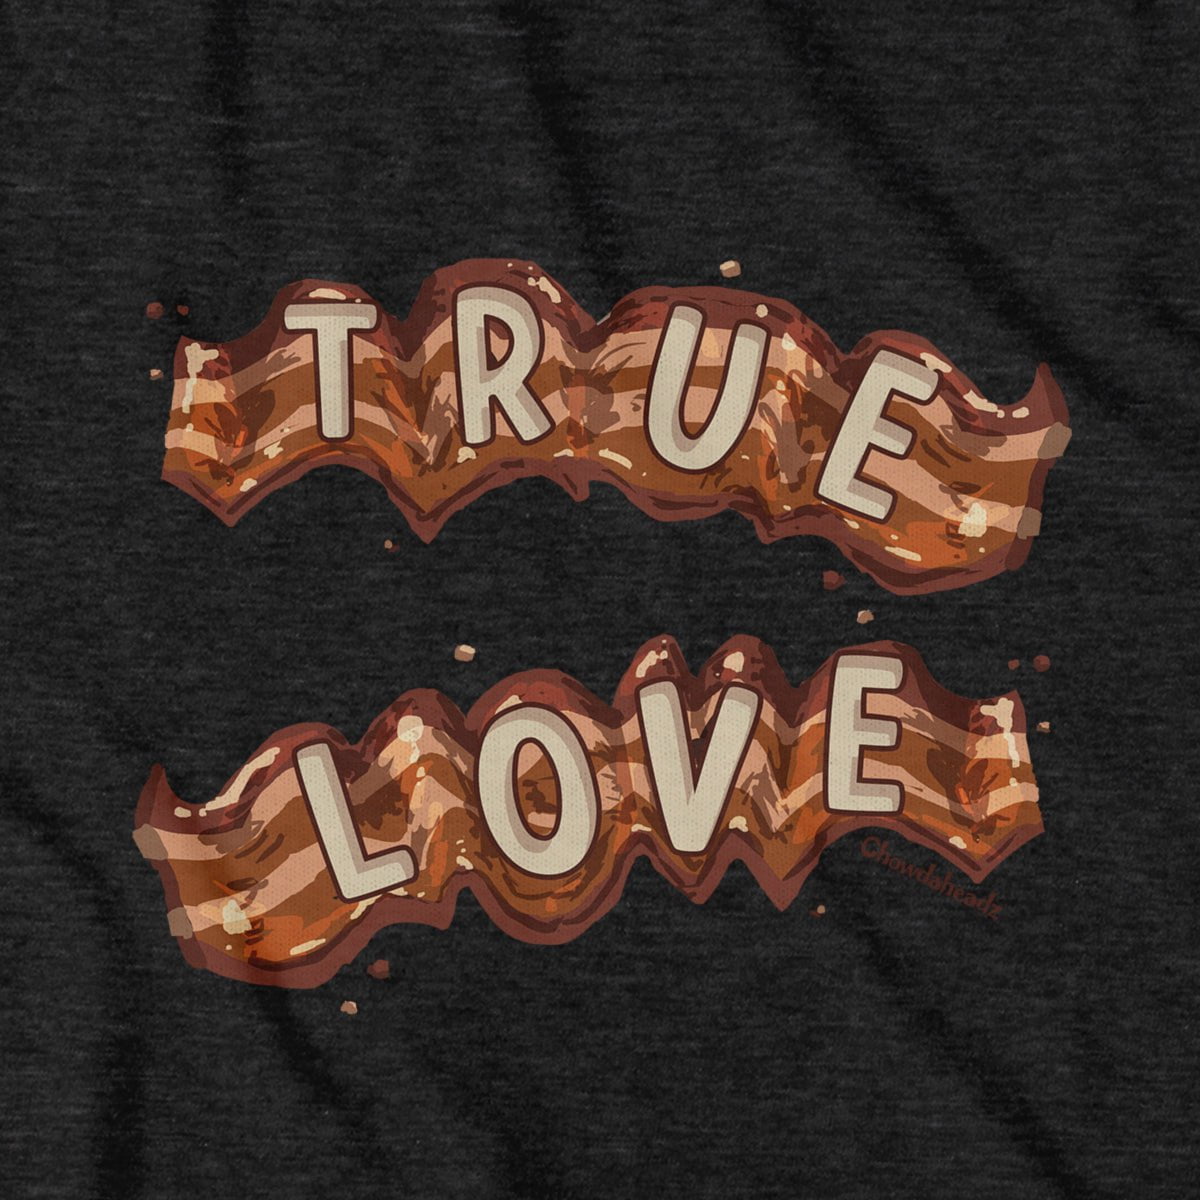 True Love Bacon T-Shirt - Chowdaheadz